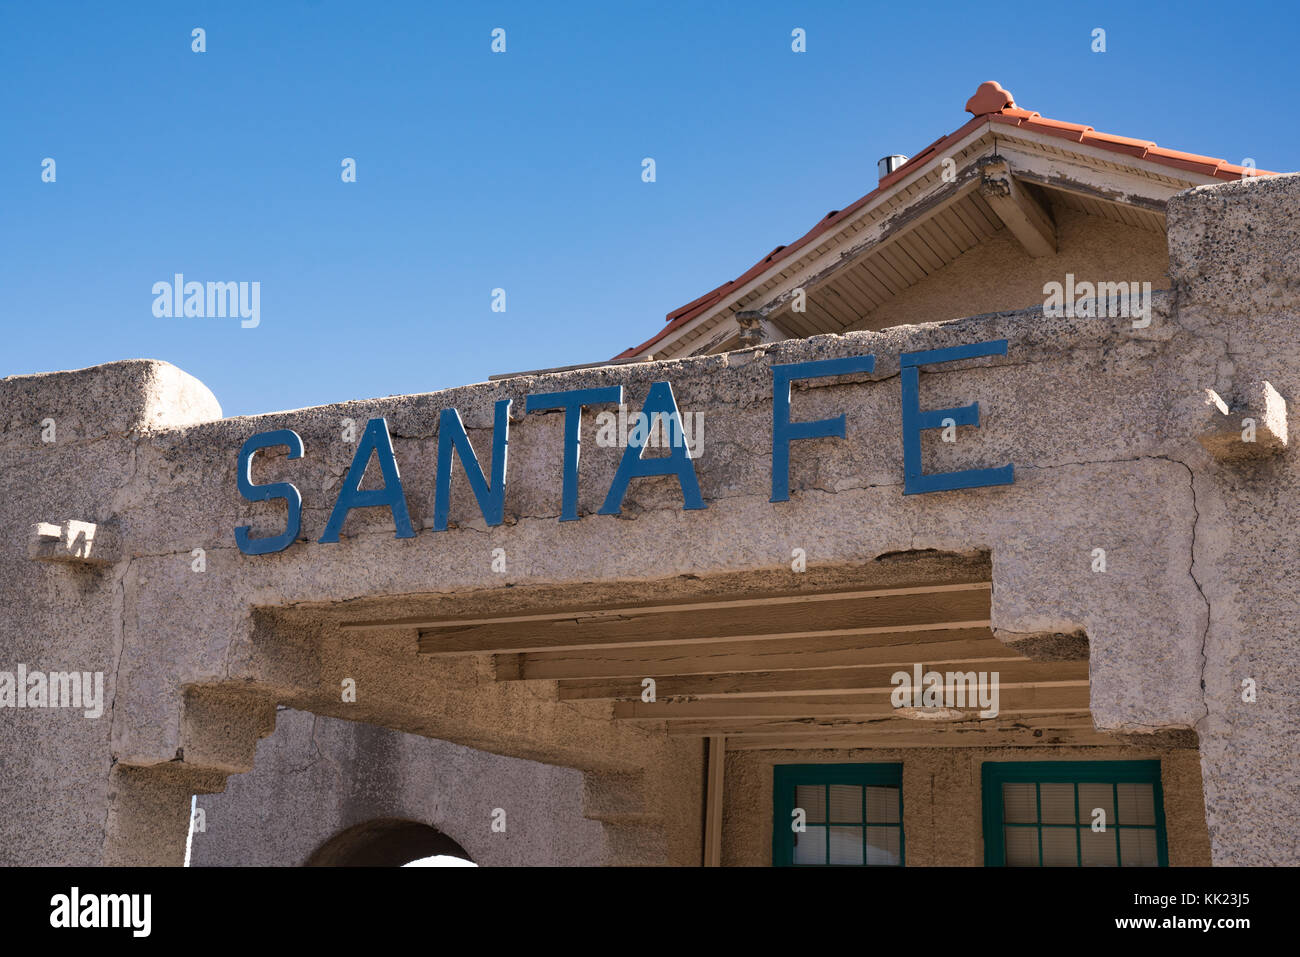 SANTA FE, NM - OCTOBER 13: Santa Fe sign at the entrance to the historic Santa Fe train station on October 13, 2017 Stock Photo